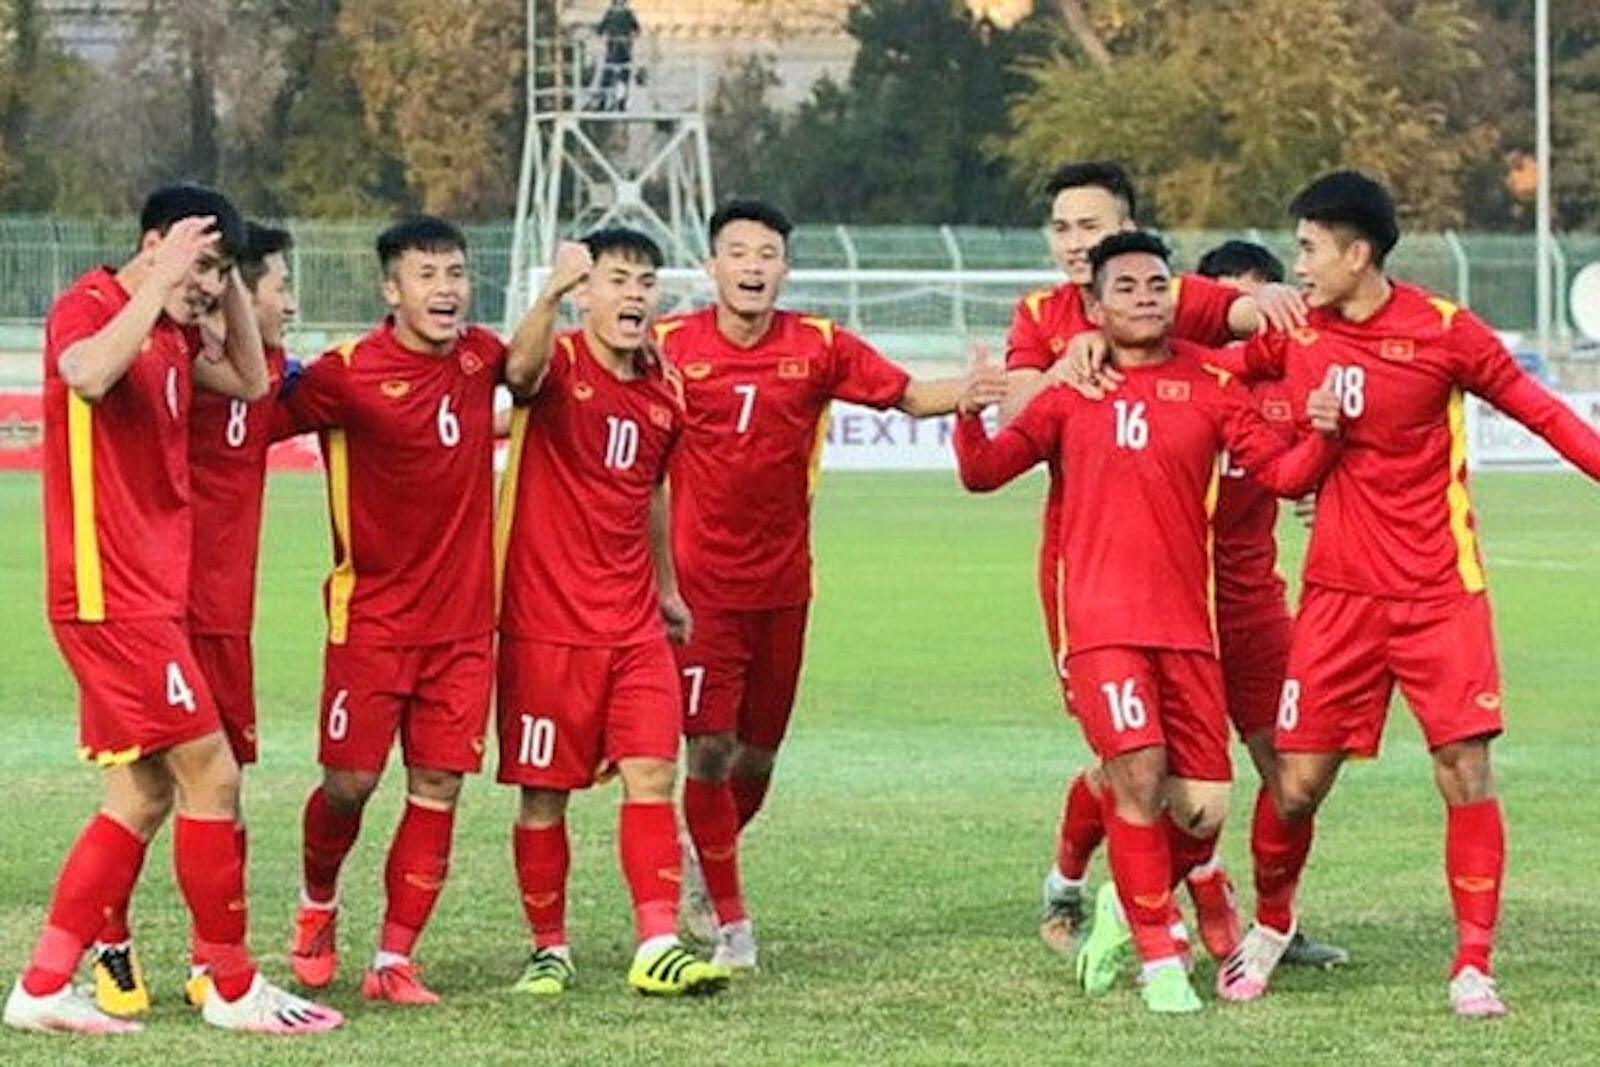 U23 Việt Nam dự giải tiền SEA Games ở Campuchia - 1